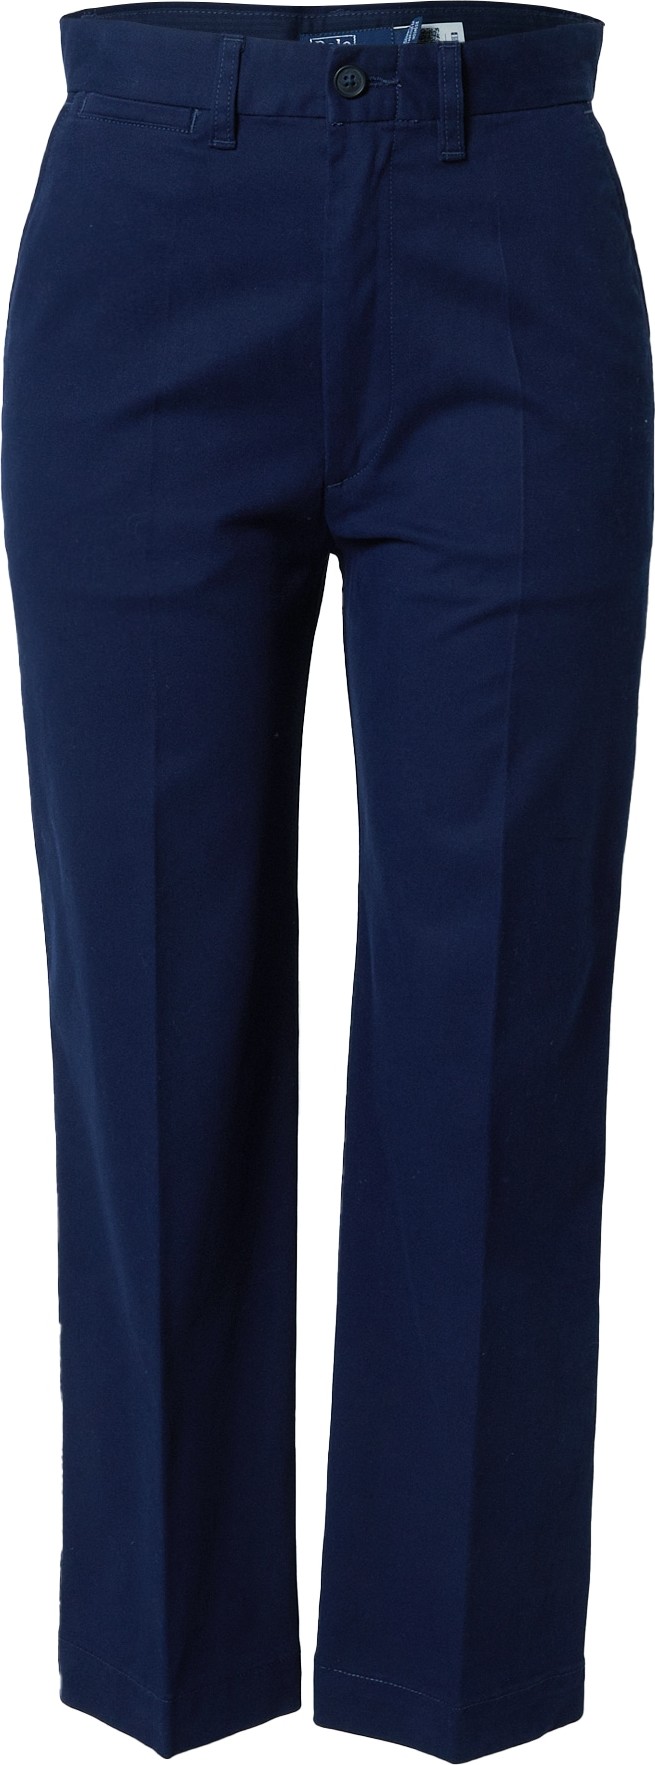 Kalhoty s puky Polo Ralph Lauren tmavě modrá